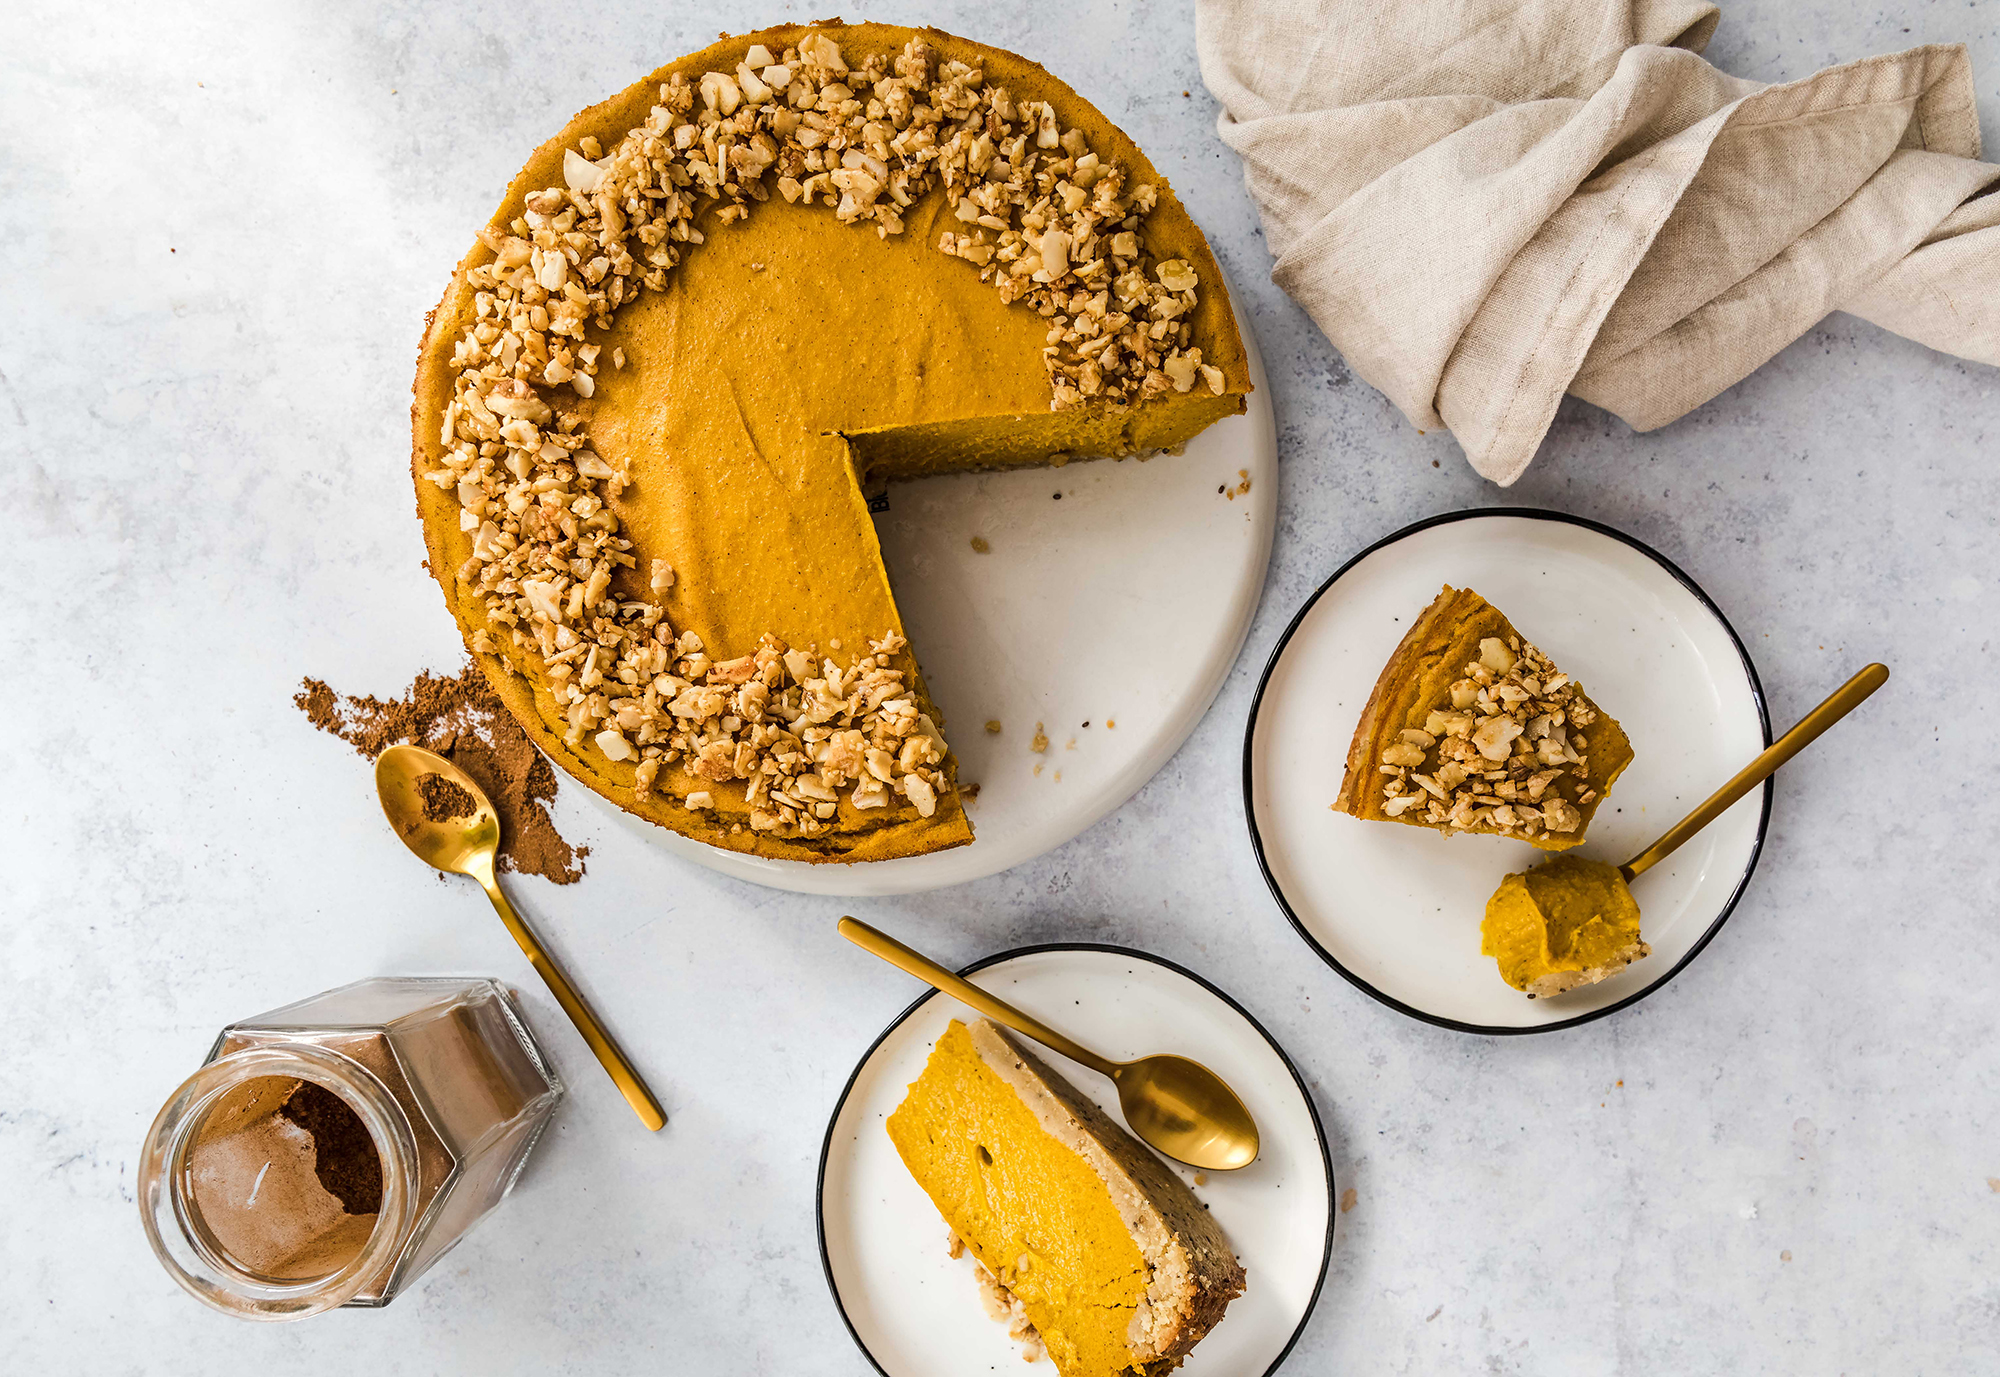 The vegan and gluten-free recipe for Pumpkin Pie